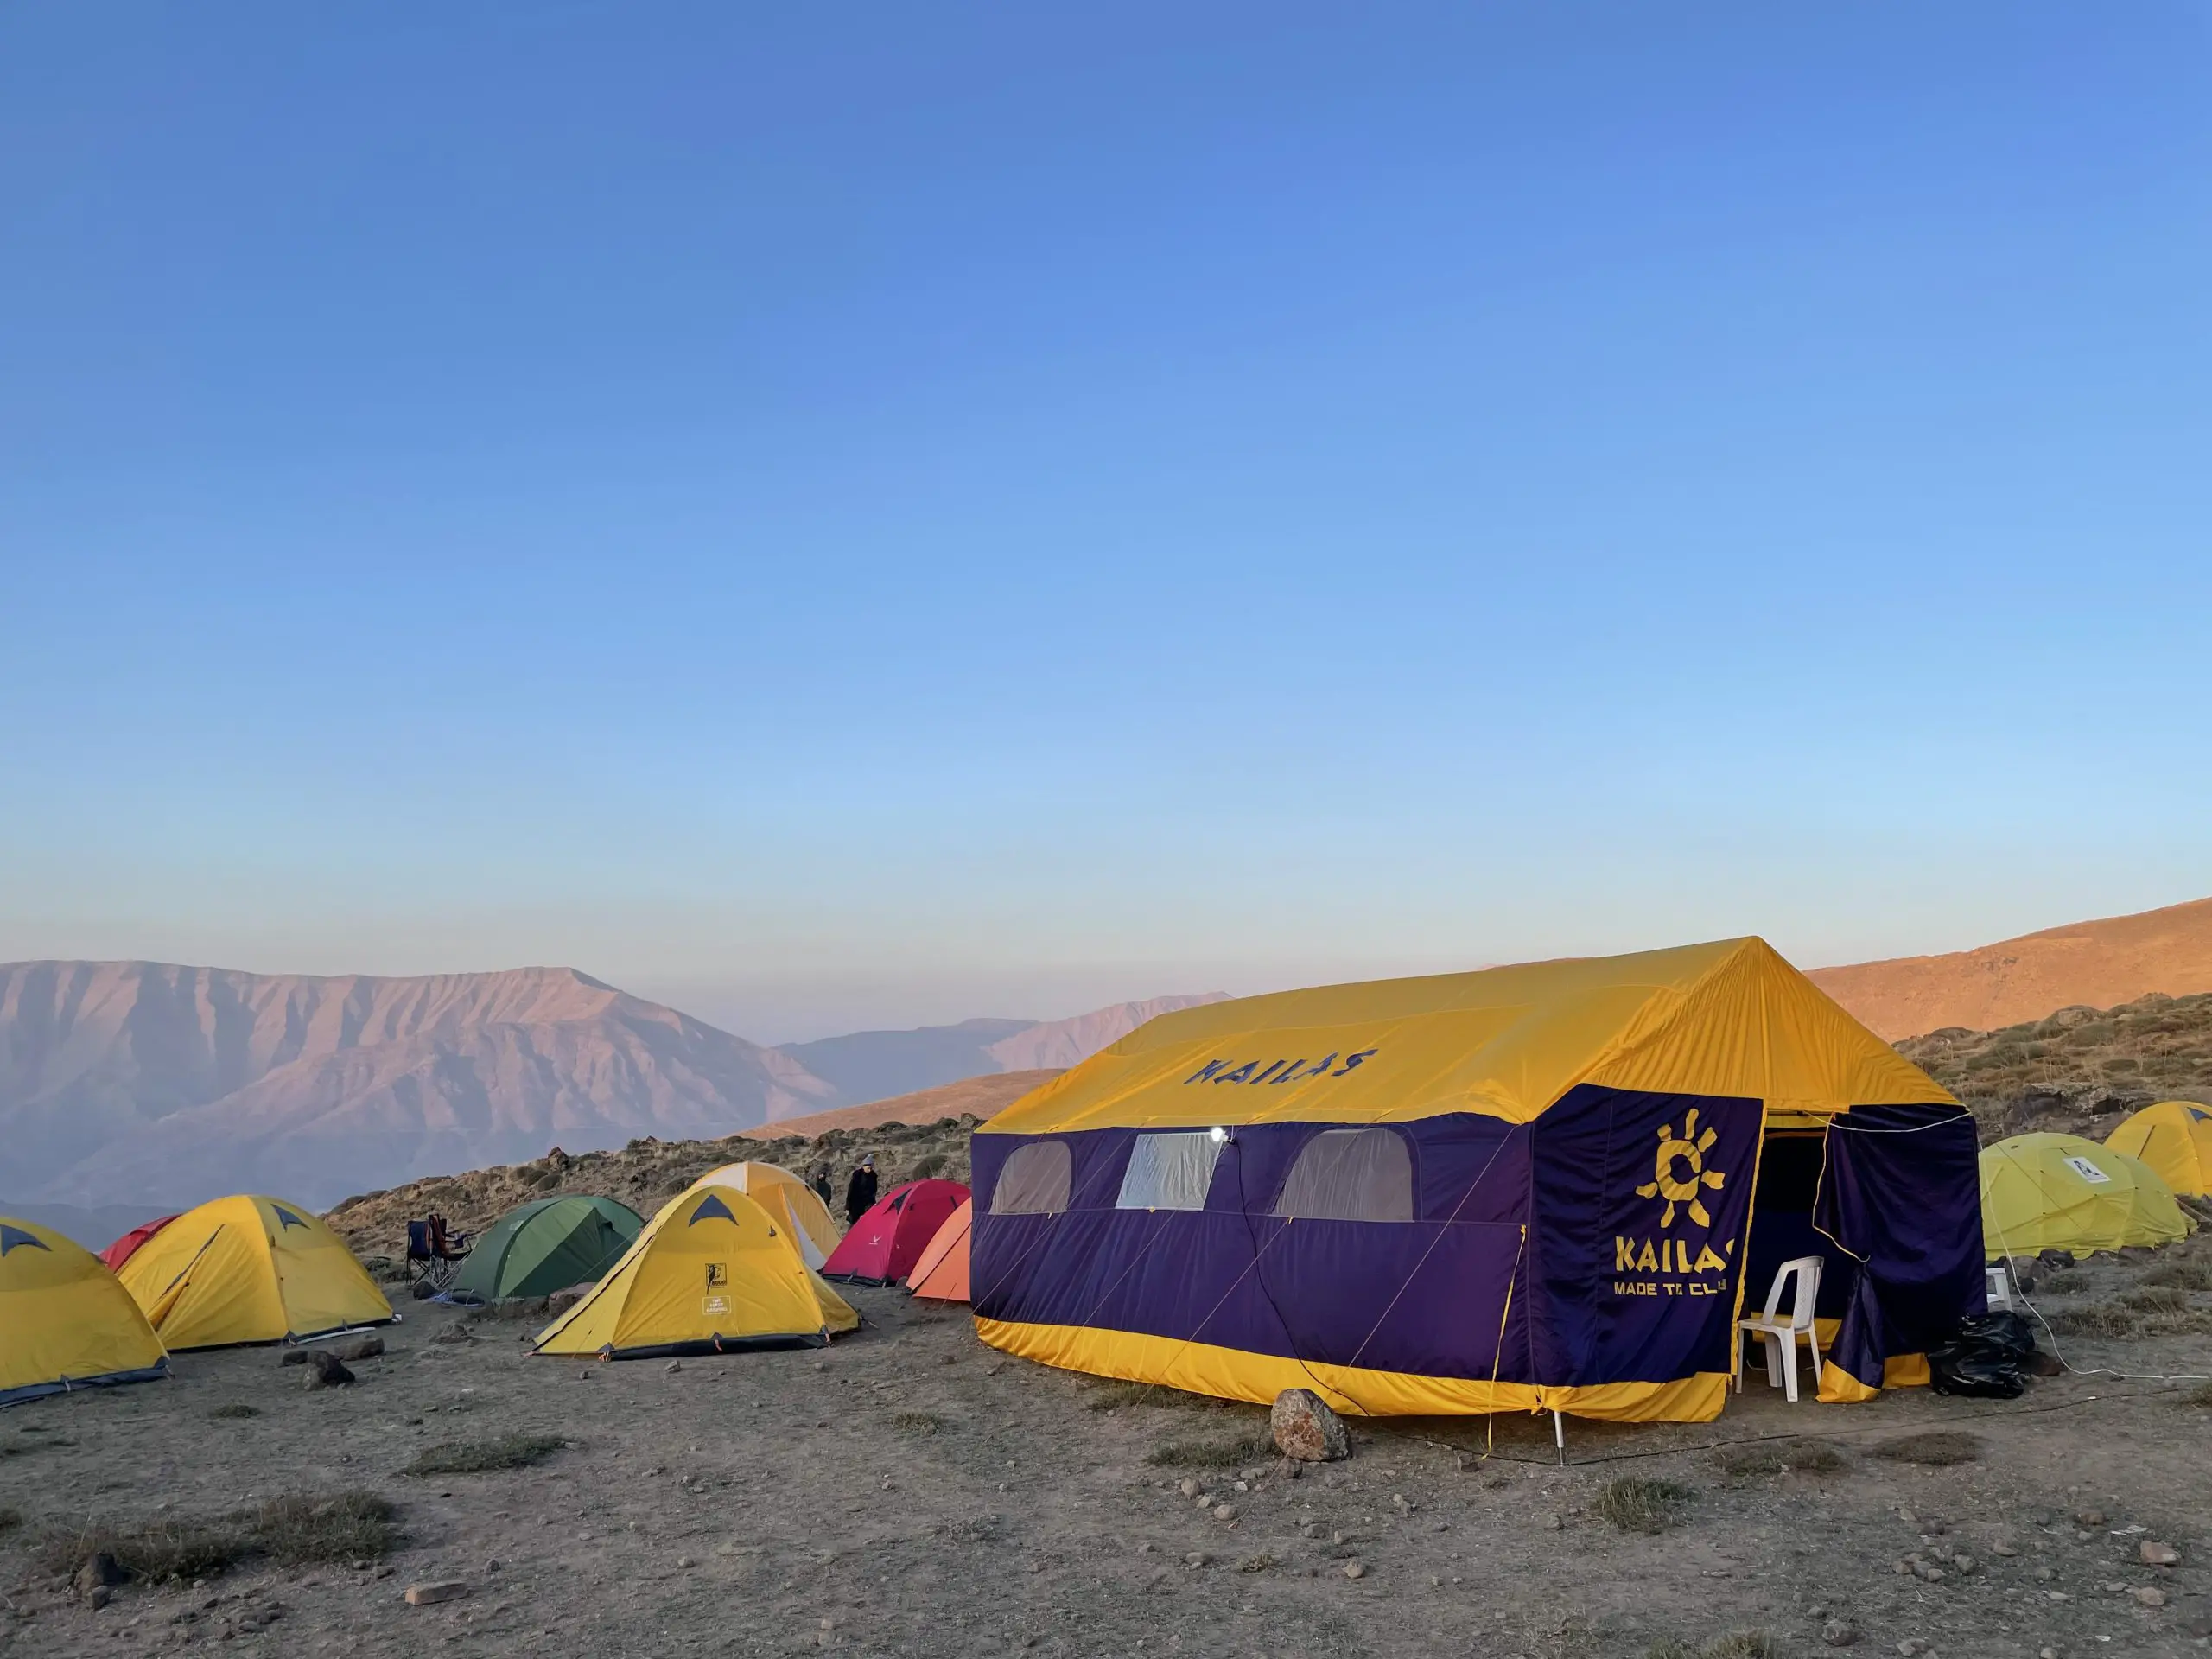 IMG 20210919 124054 434 scaled - Adventures on Mount Damavand & Reghez Canyon